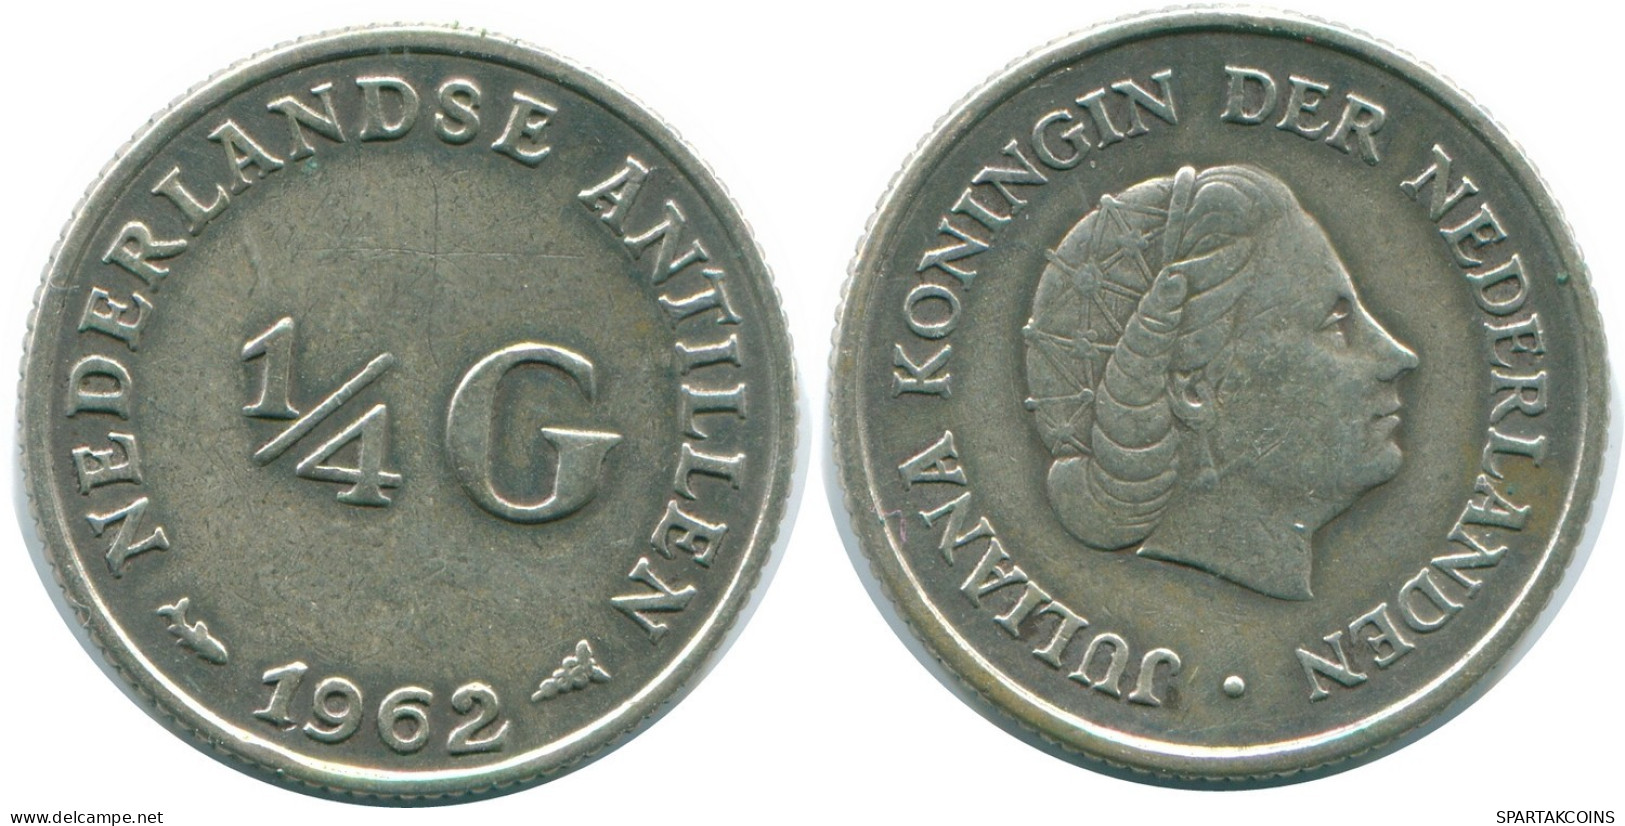 1/4 GULDEN 1962 NETHERLANDS ANTILLES SILVER Colonial Coin #NL11167.4.U.A - Antilles Néerlandaises